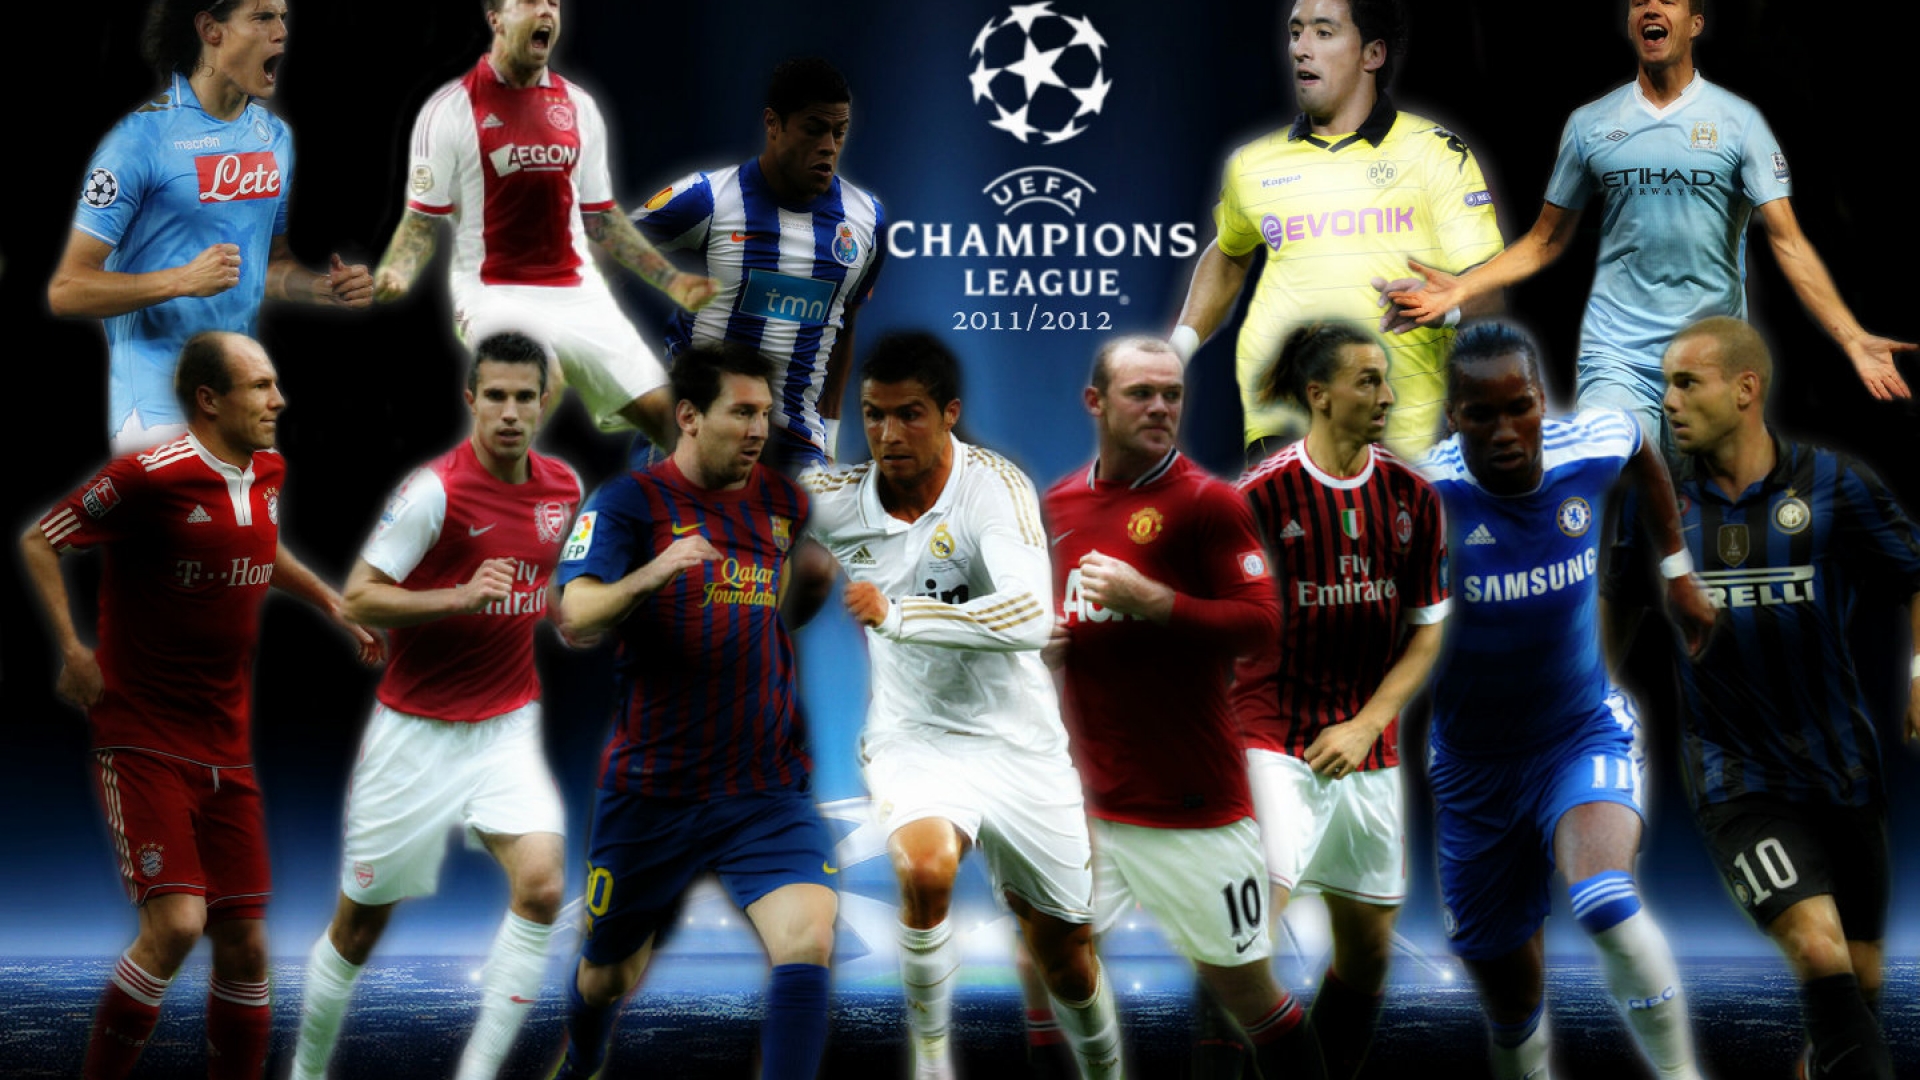 Champions League Wallpaper High Resolution Wallpapers